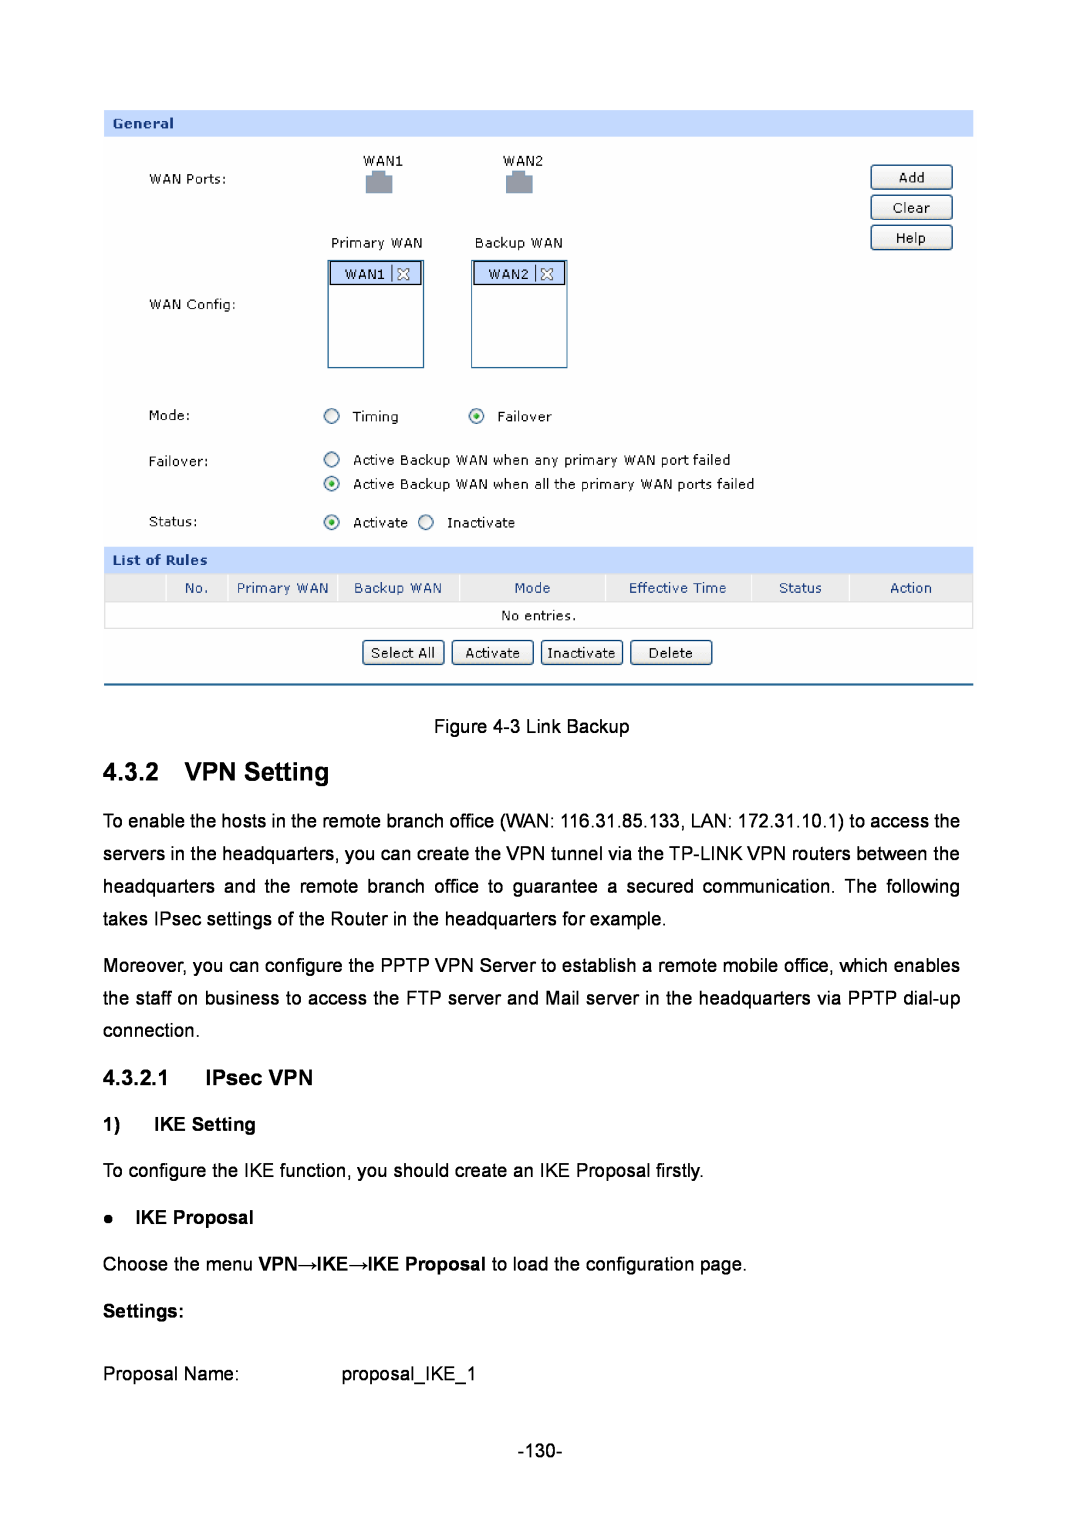 TP-Link TL-ER6020 manual VPN Setting, IPsec VPN, IKE Setting,  IKE Proposal, Settings 